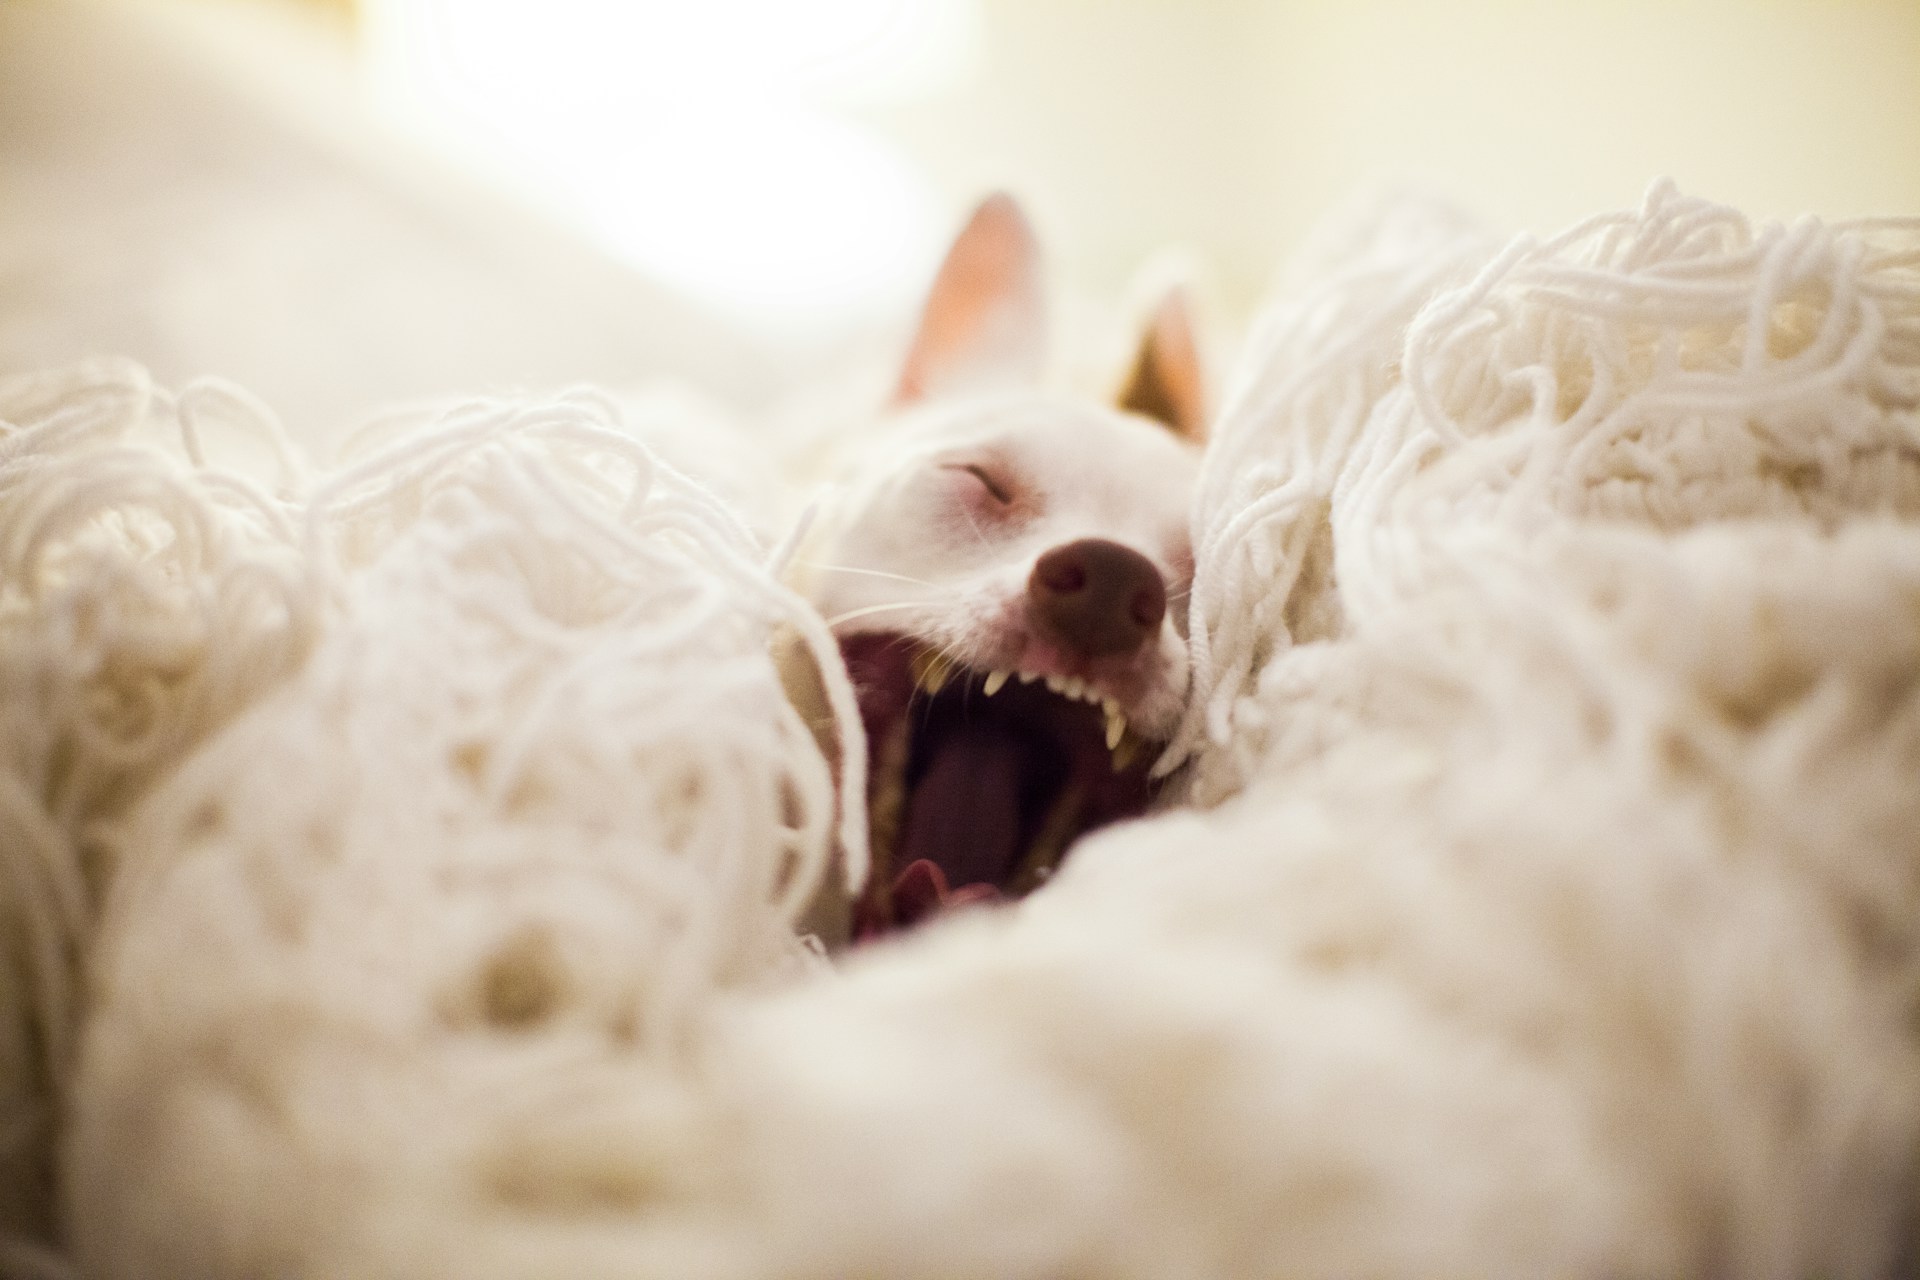 A dog yawning as they sleep on a wool blanket